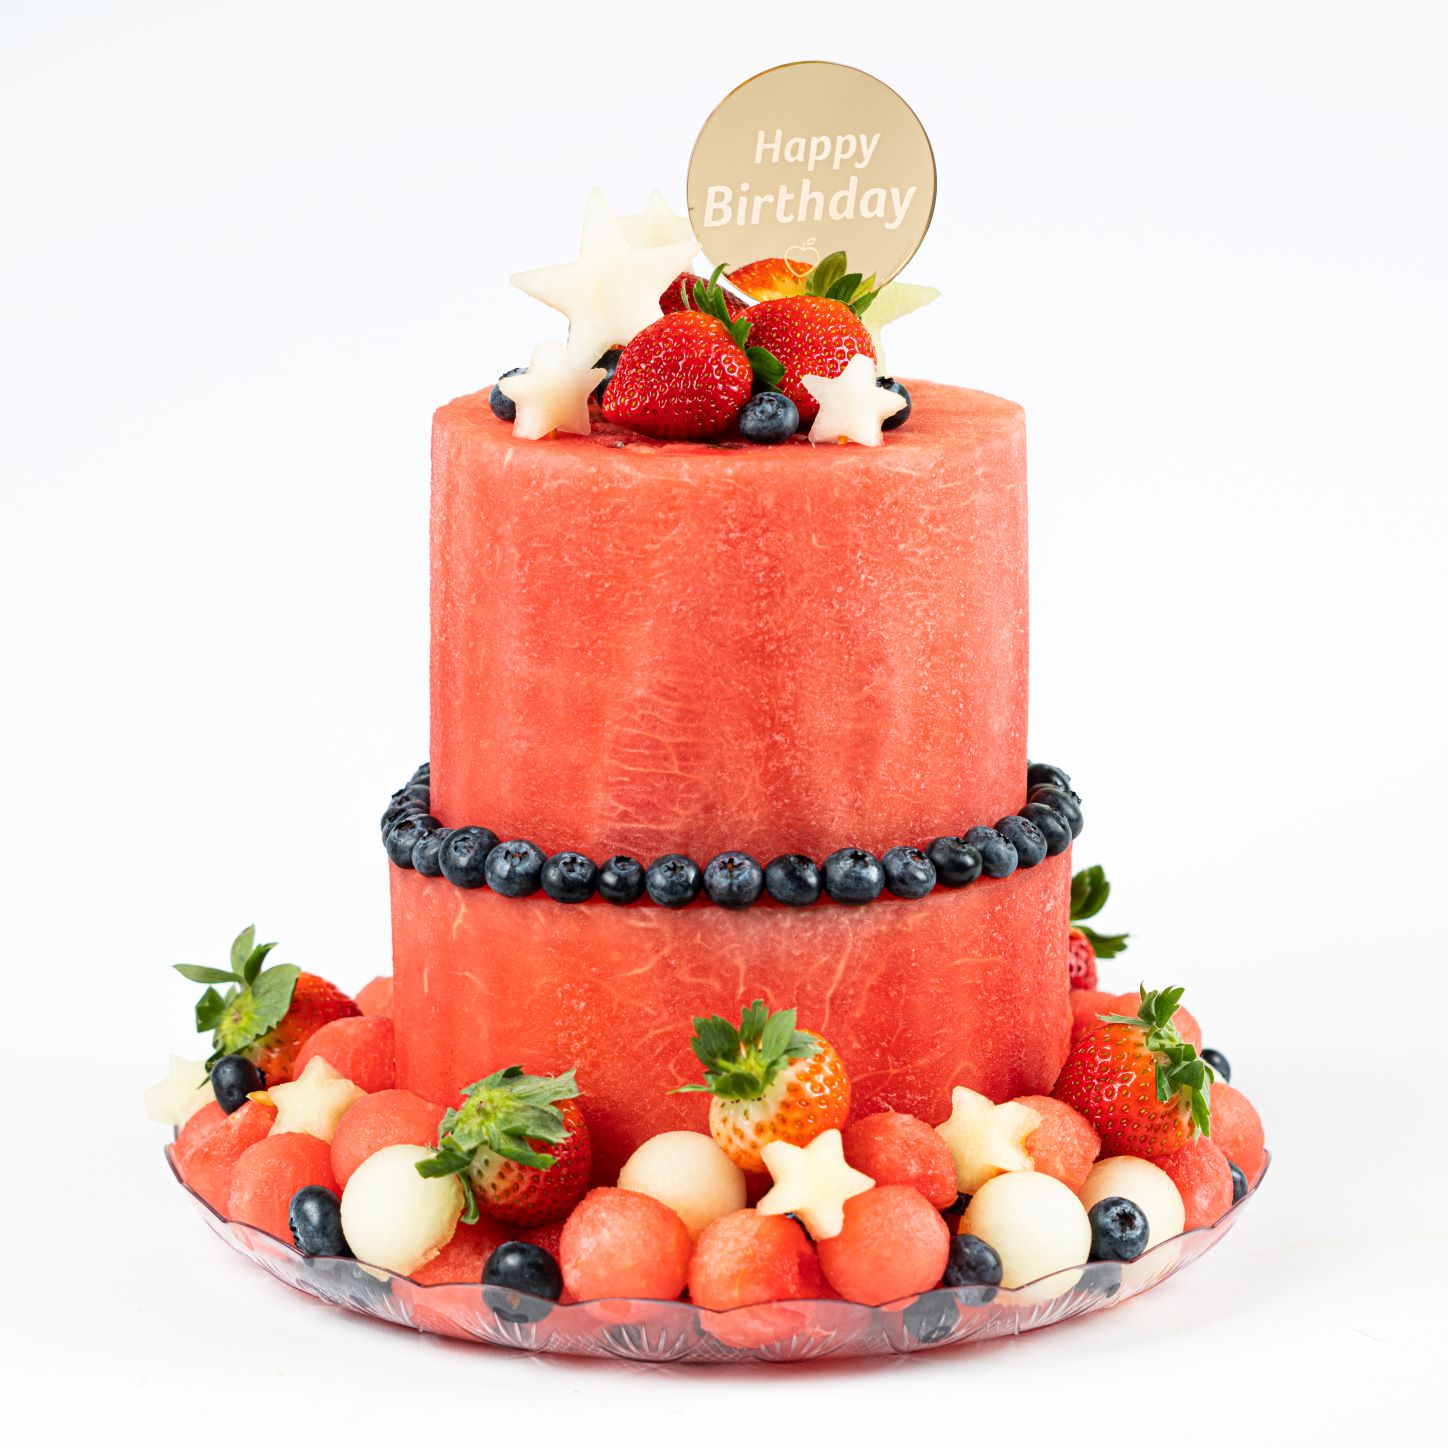 Happy Birthday 2 Tier Watermelon Cake